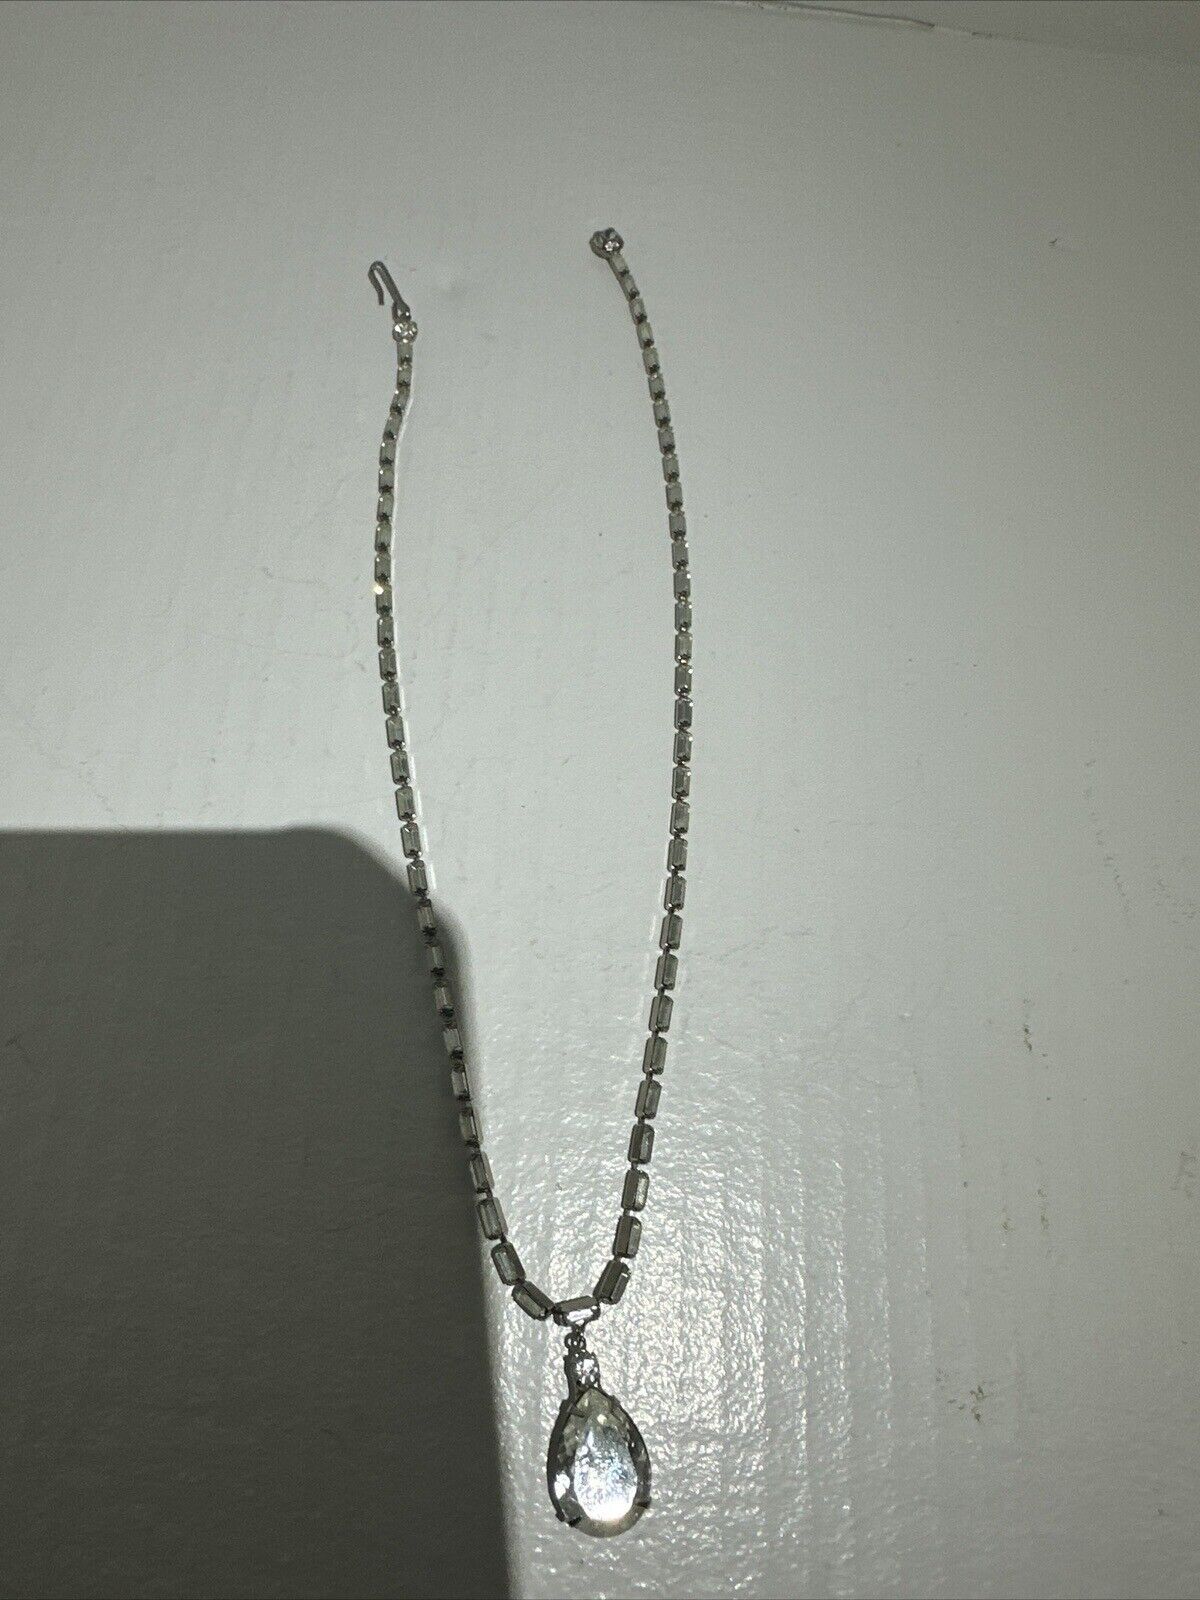 pear shaped pendant necklace - image 2